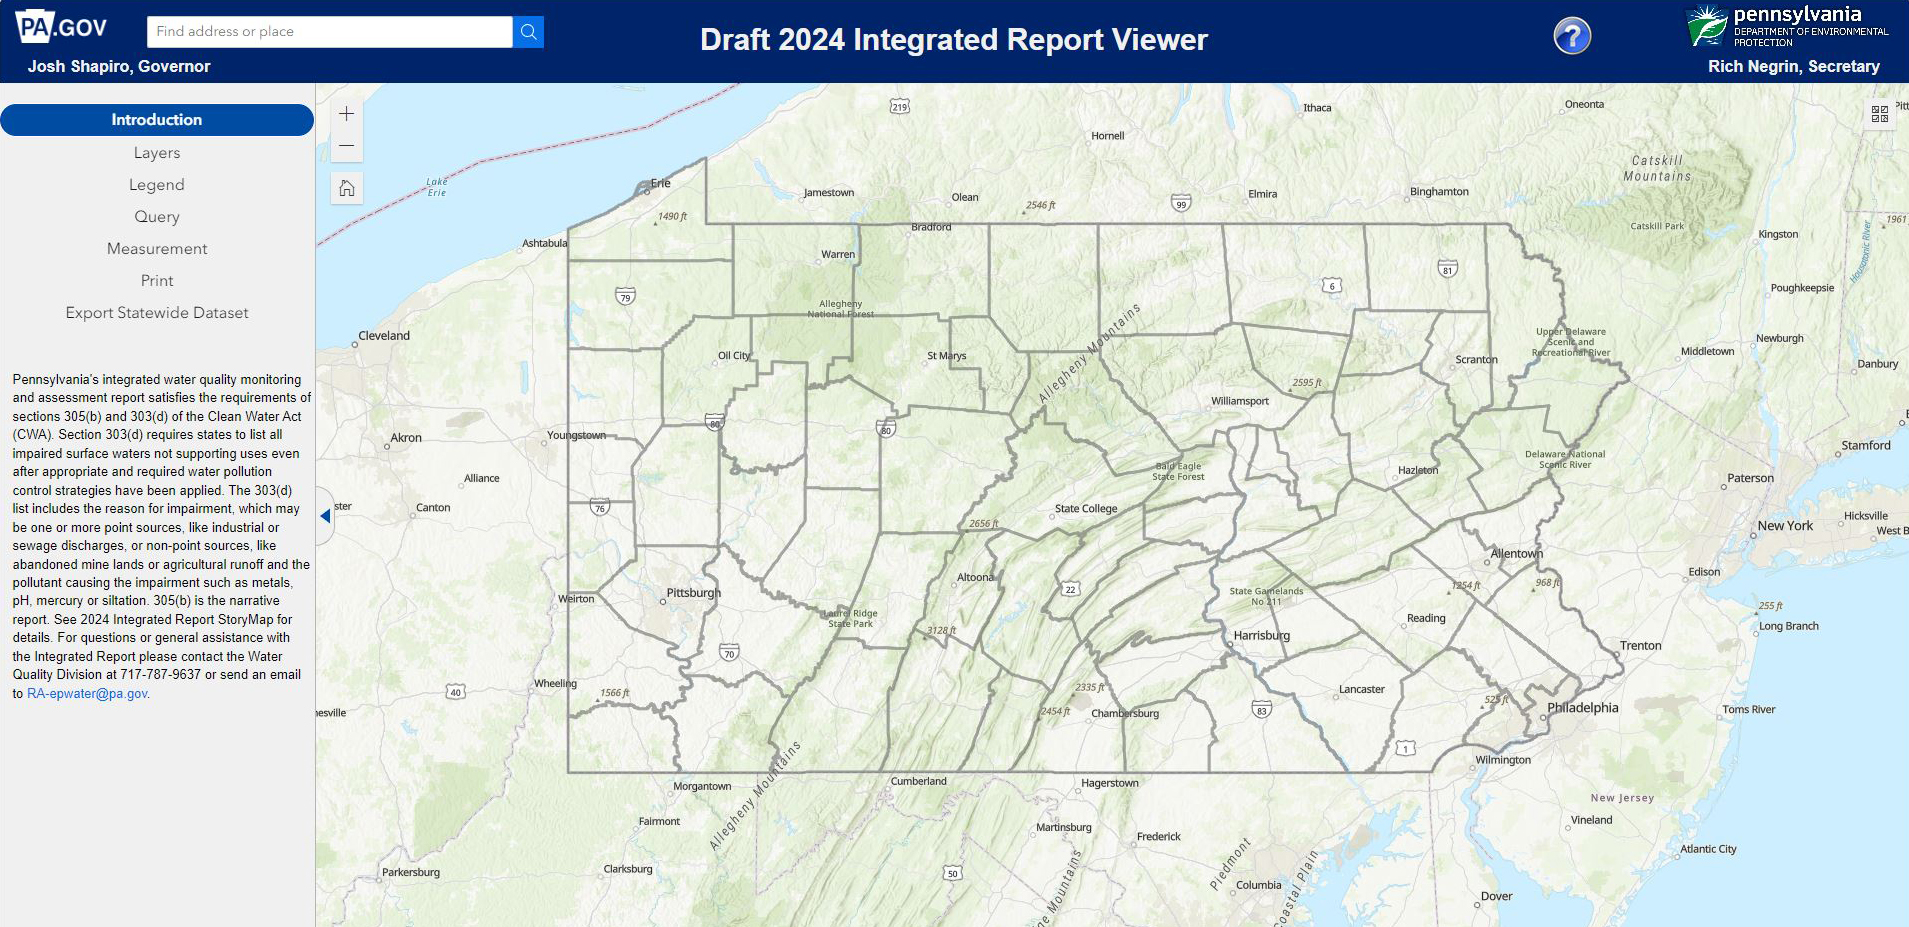 IR Viewer main screen showing map of Pennsylvania